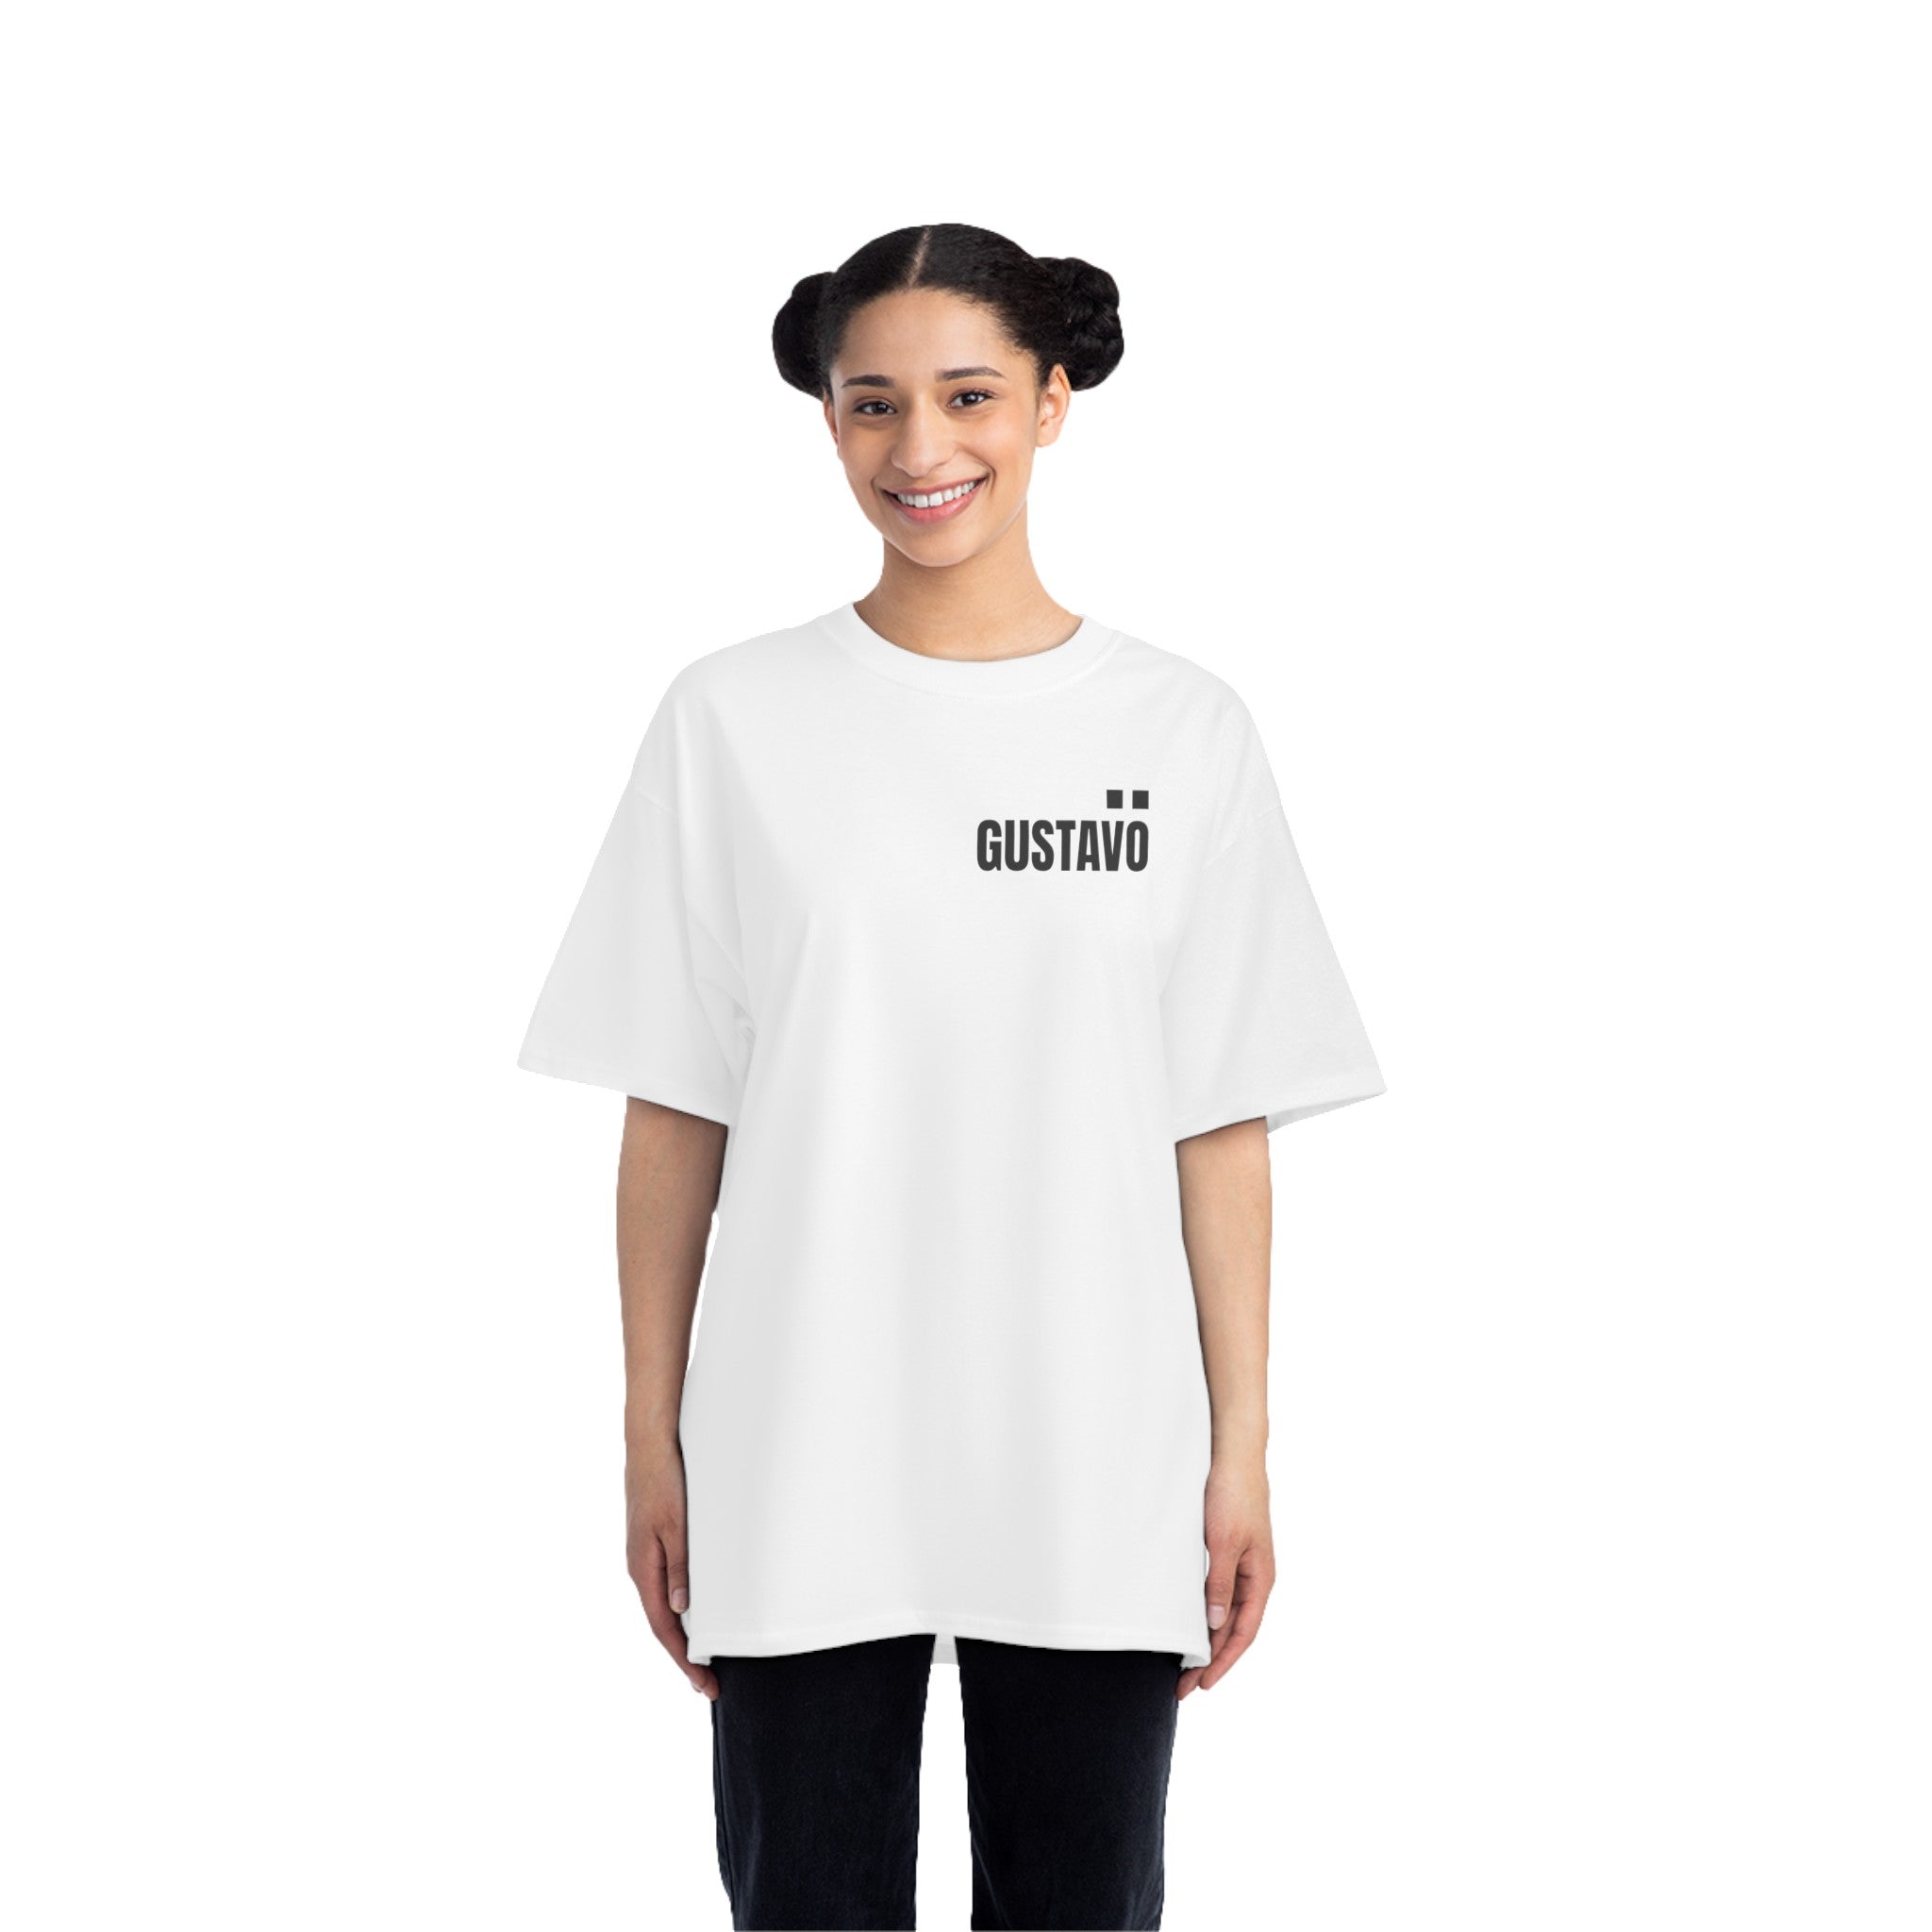 GUSTAVO Beefy-T®  Short-Sleeve T-Shirt